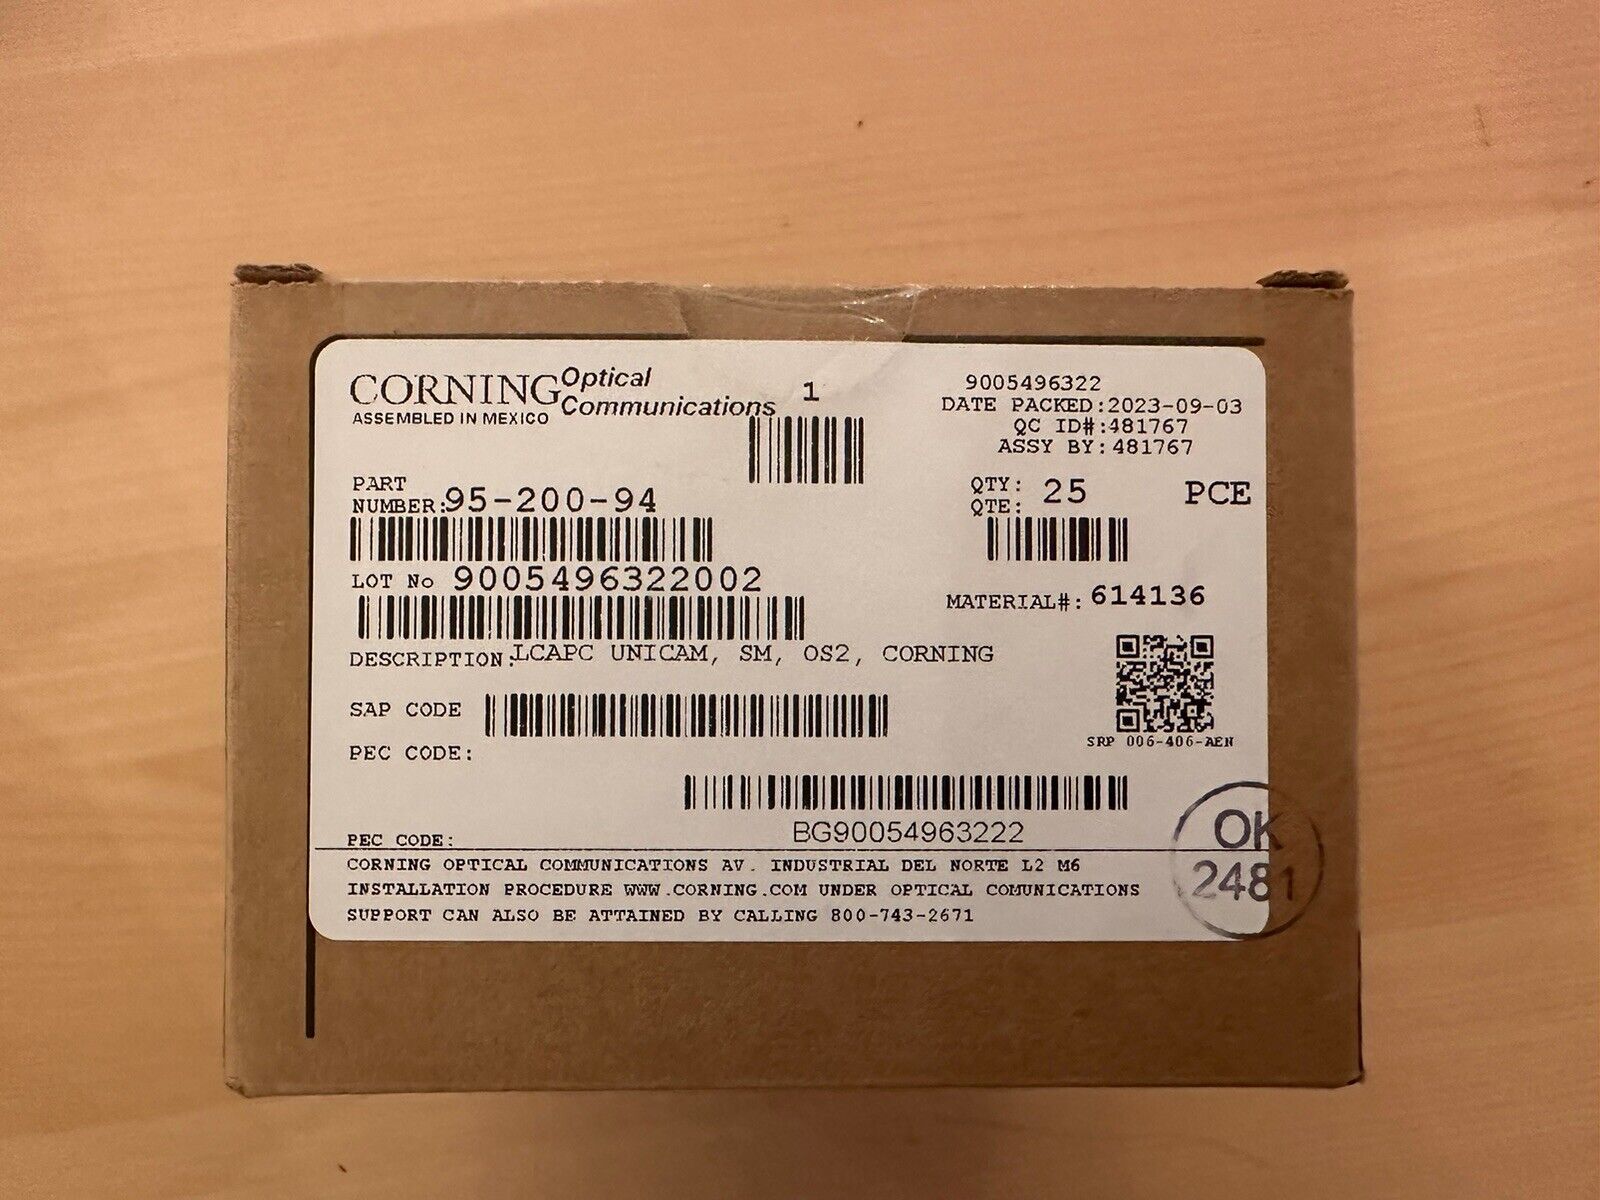 Corning 95-200-94 Unicam Connector Pretium Packed 2023, Box Of 25